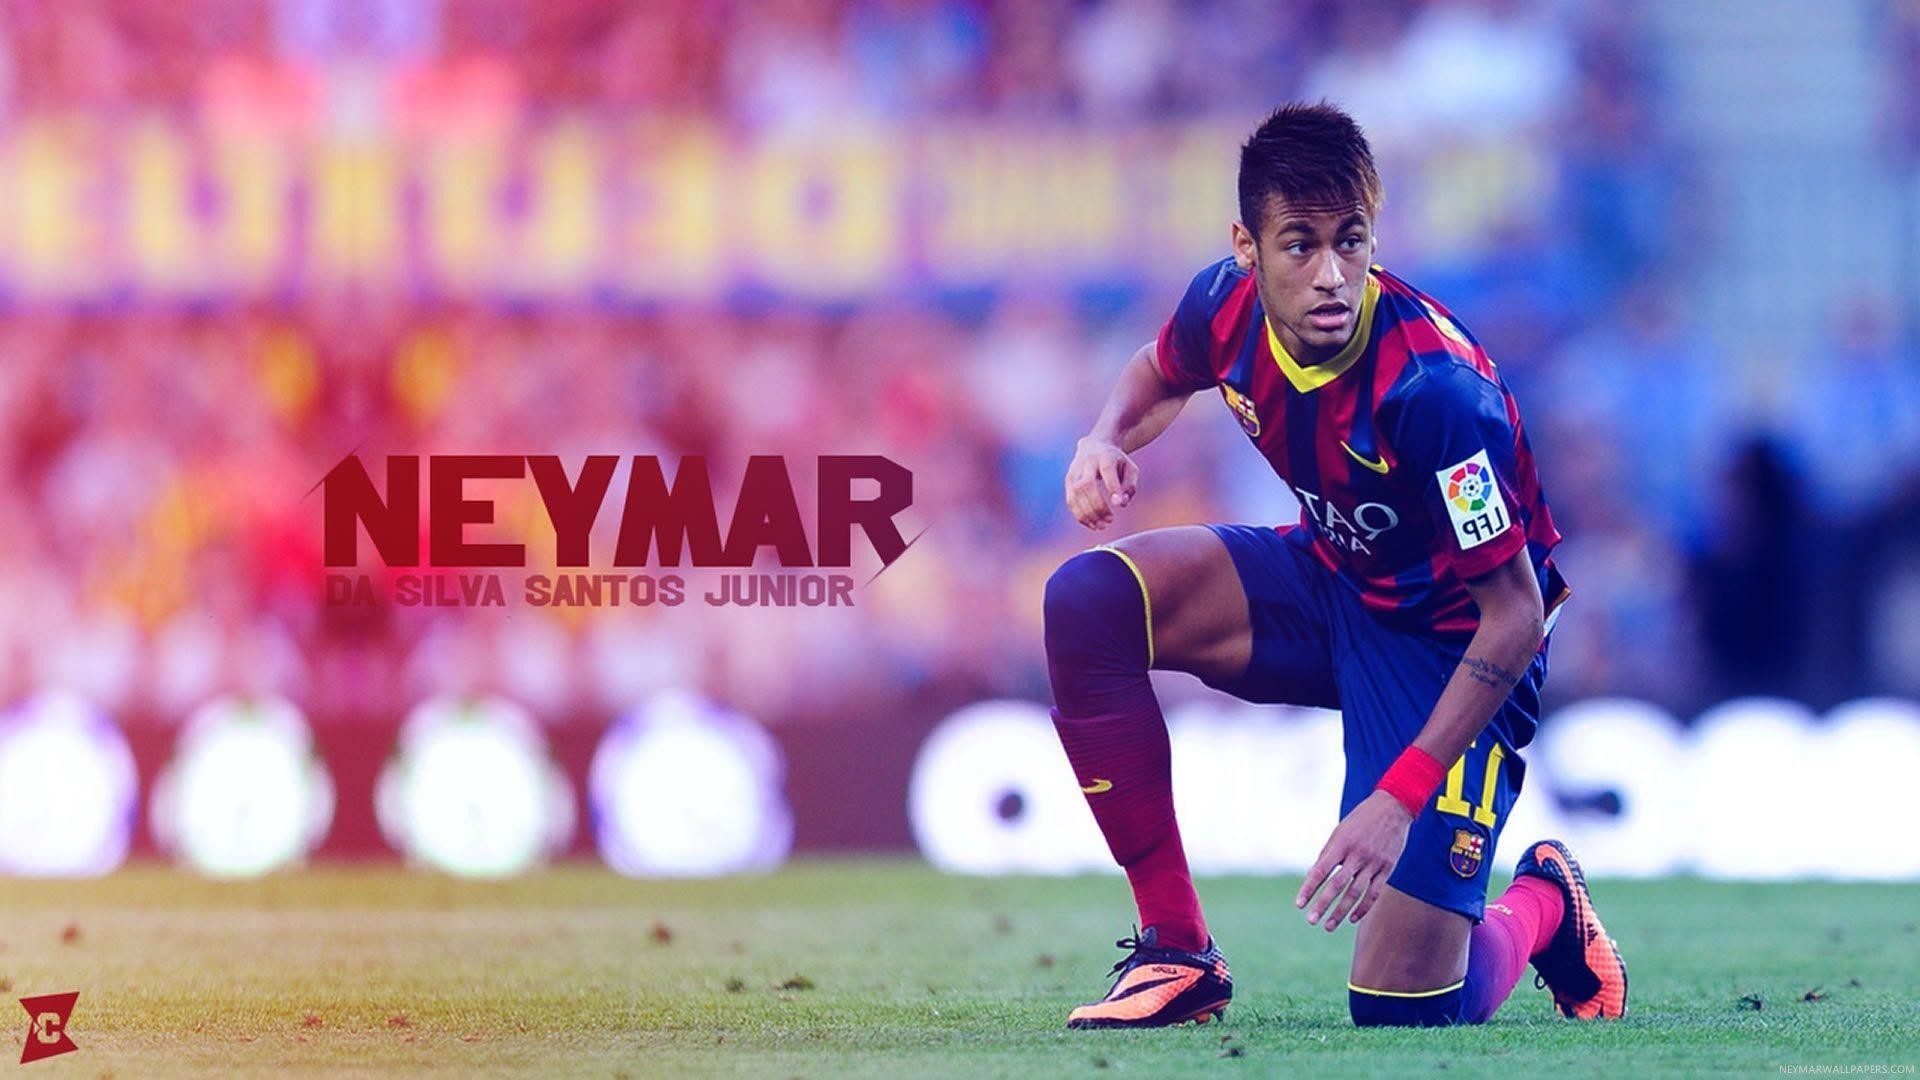 1920x1080 Neymar HD Wallpapers 1080p - WallpaperSafari